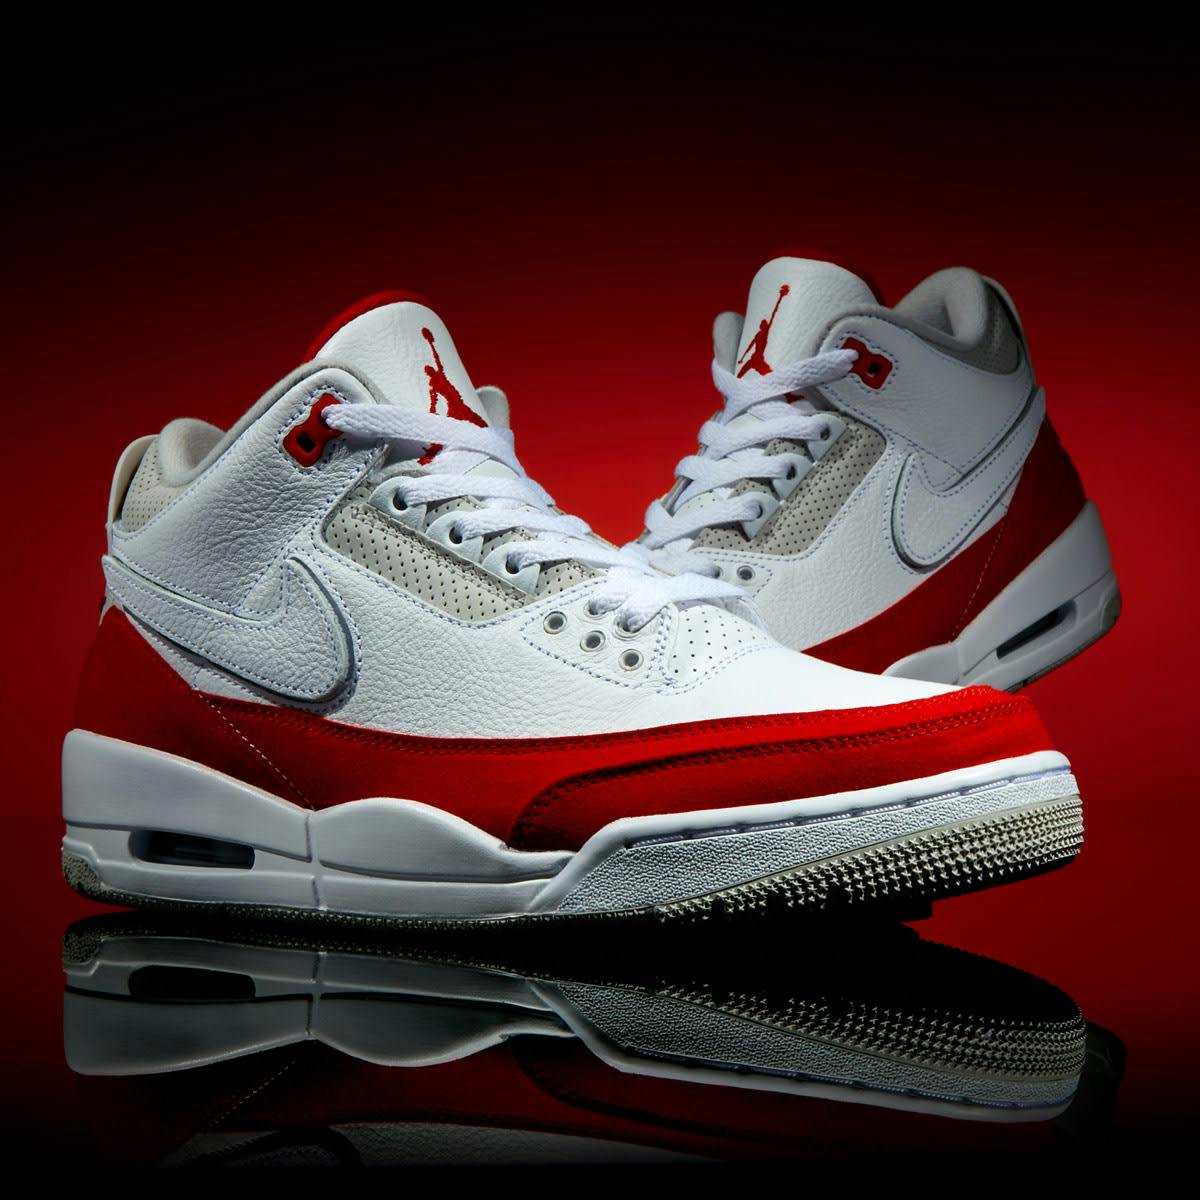 Nike Air Jordan 3 Retro 'University Red' - Register Now on END